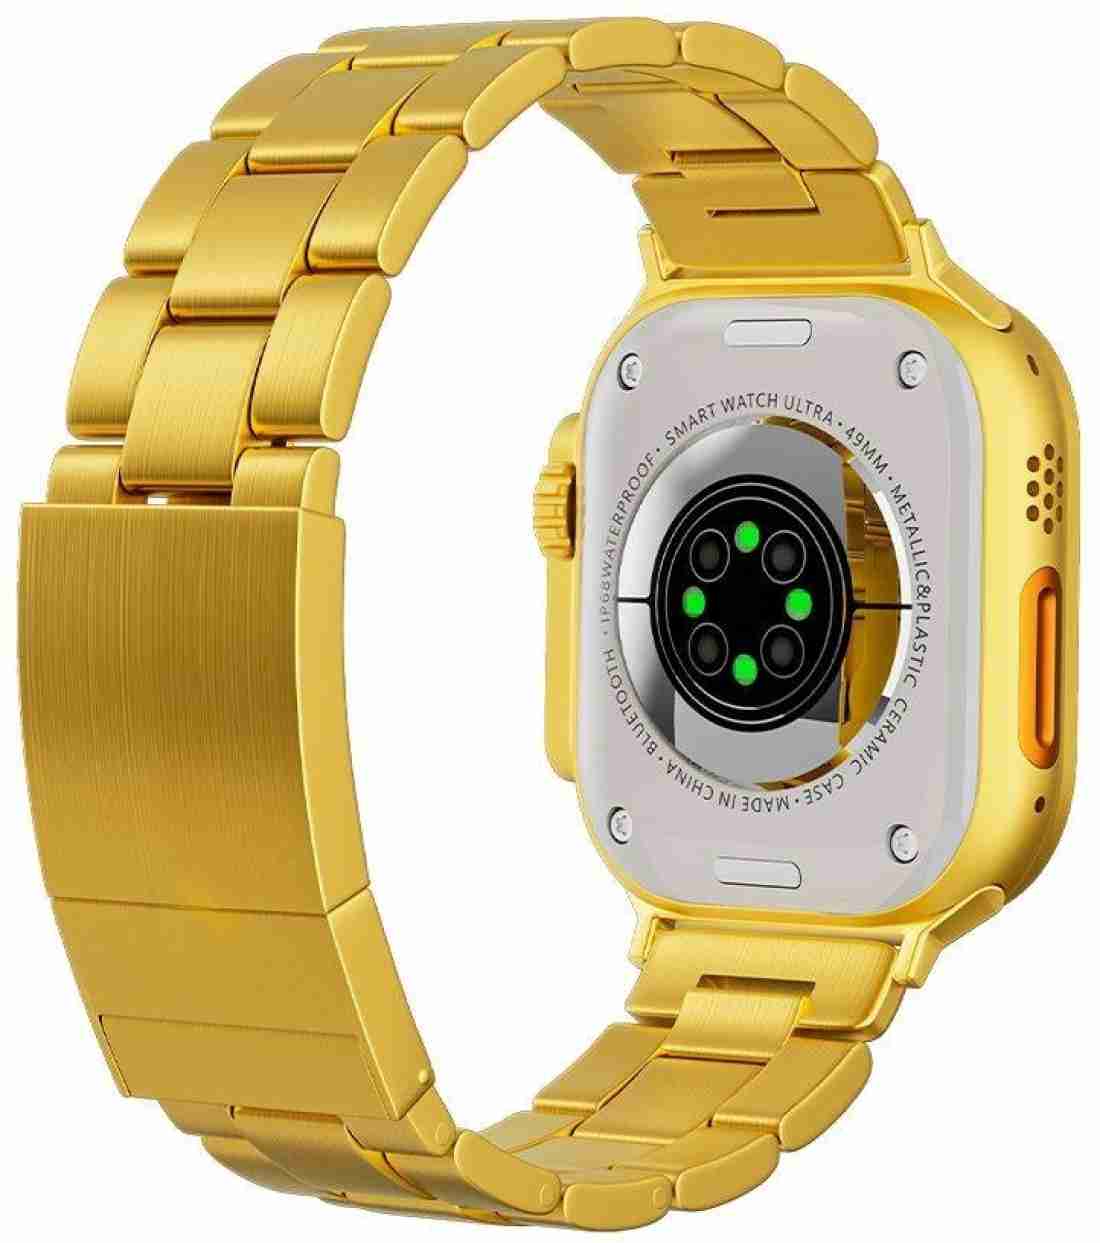 Dbeats Ultra Gold Edition Smartwatch